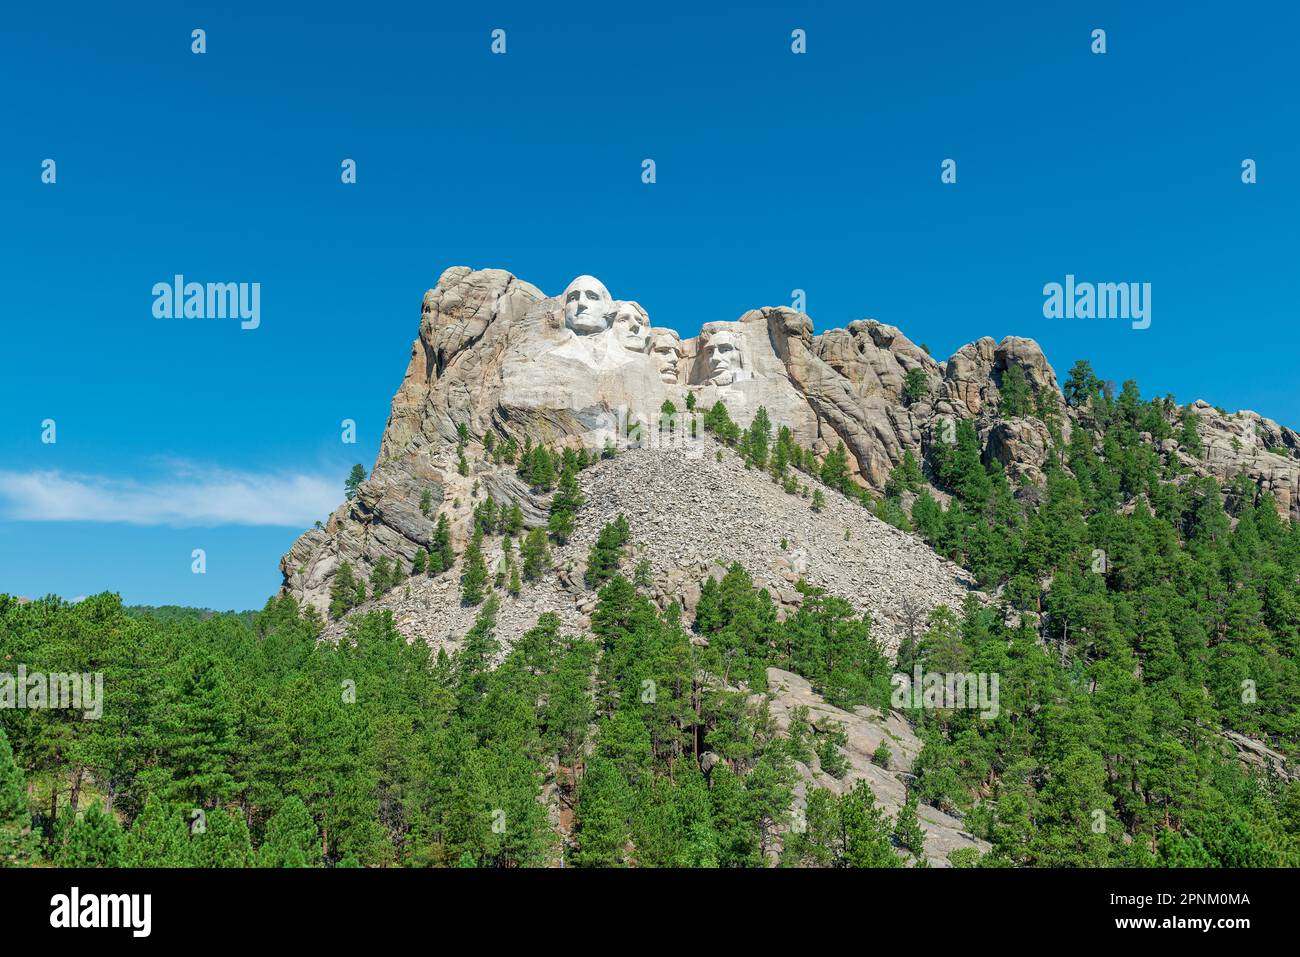 Mount Rushmore National Memorial, South Dakota, USA. Stockfoto